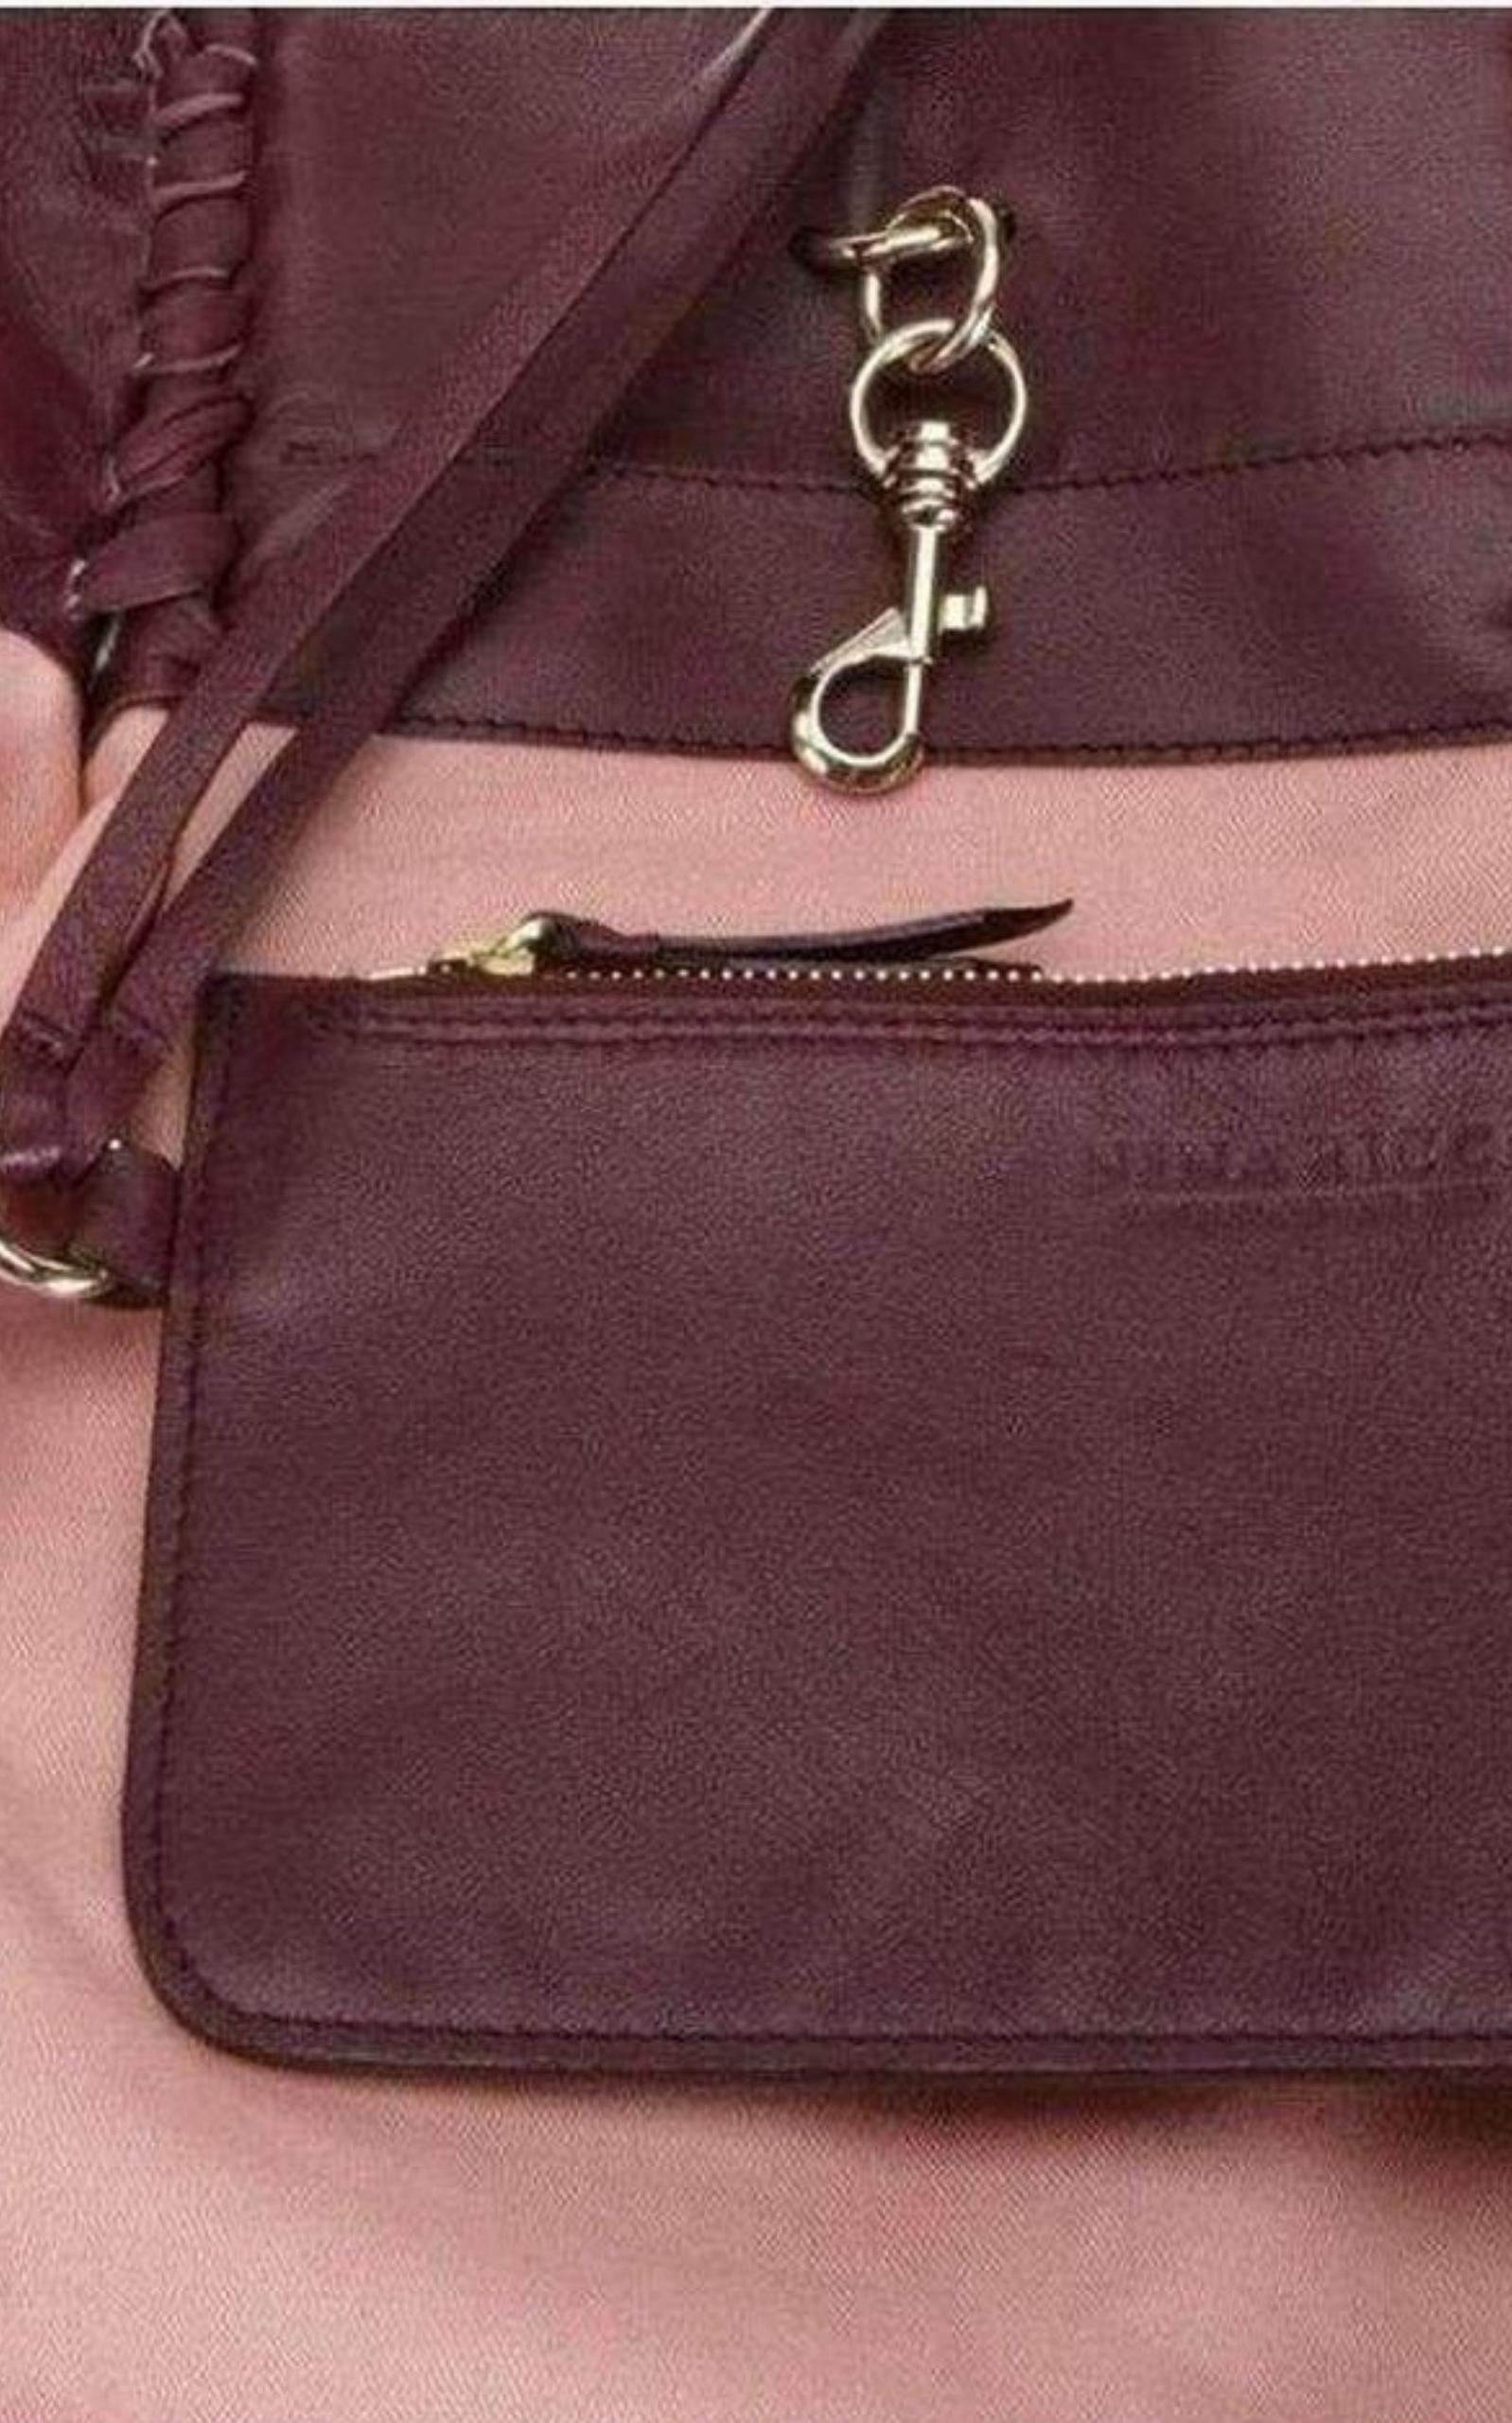  Nina RicciLiane Tiered Large Leather Tote Bag - Runway Catalog